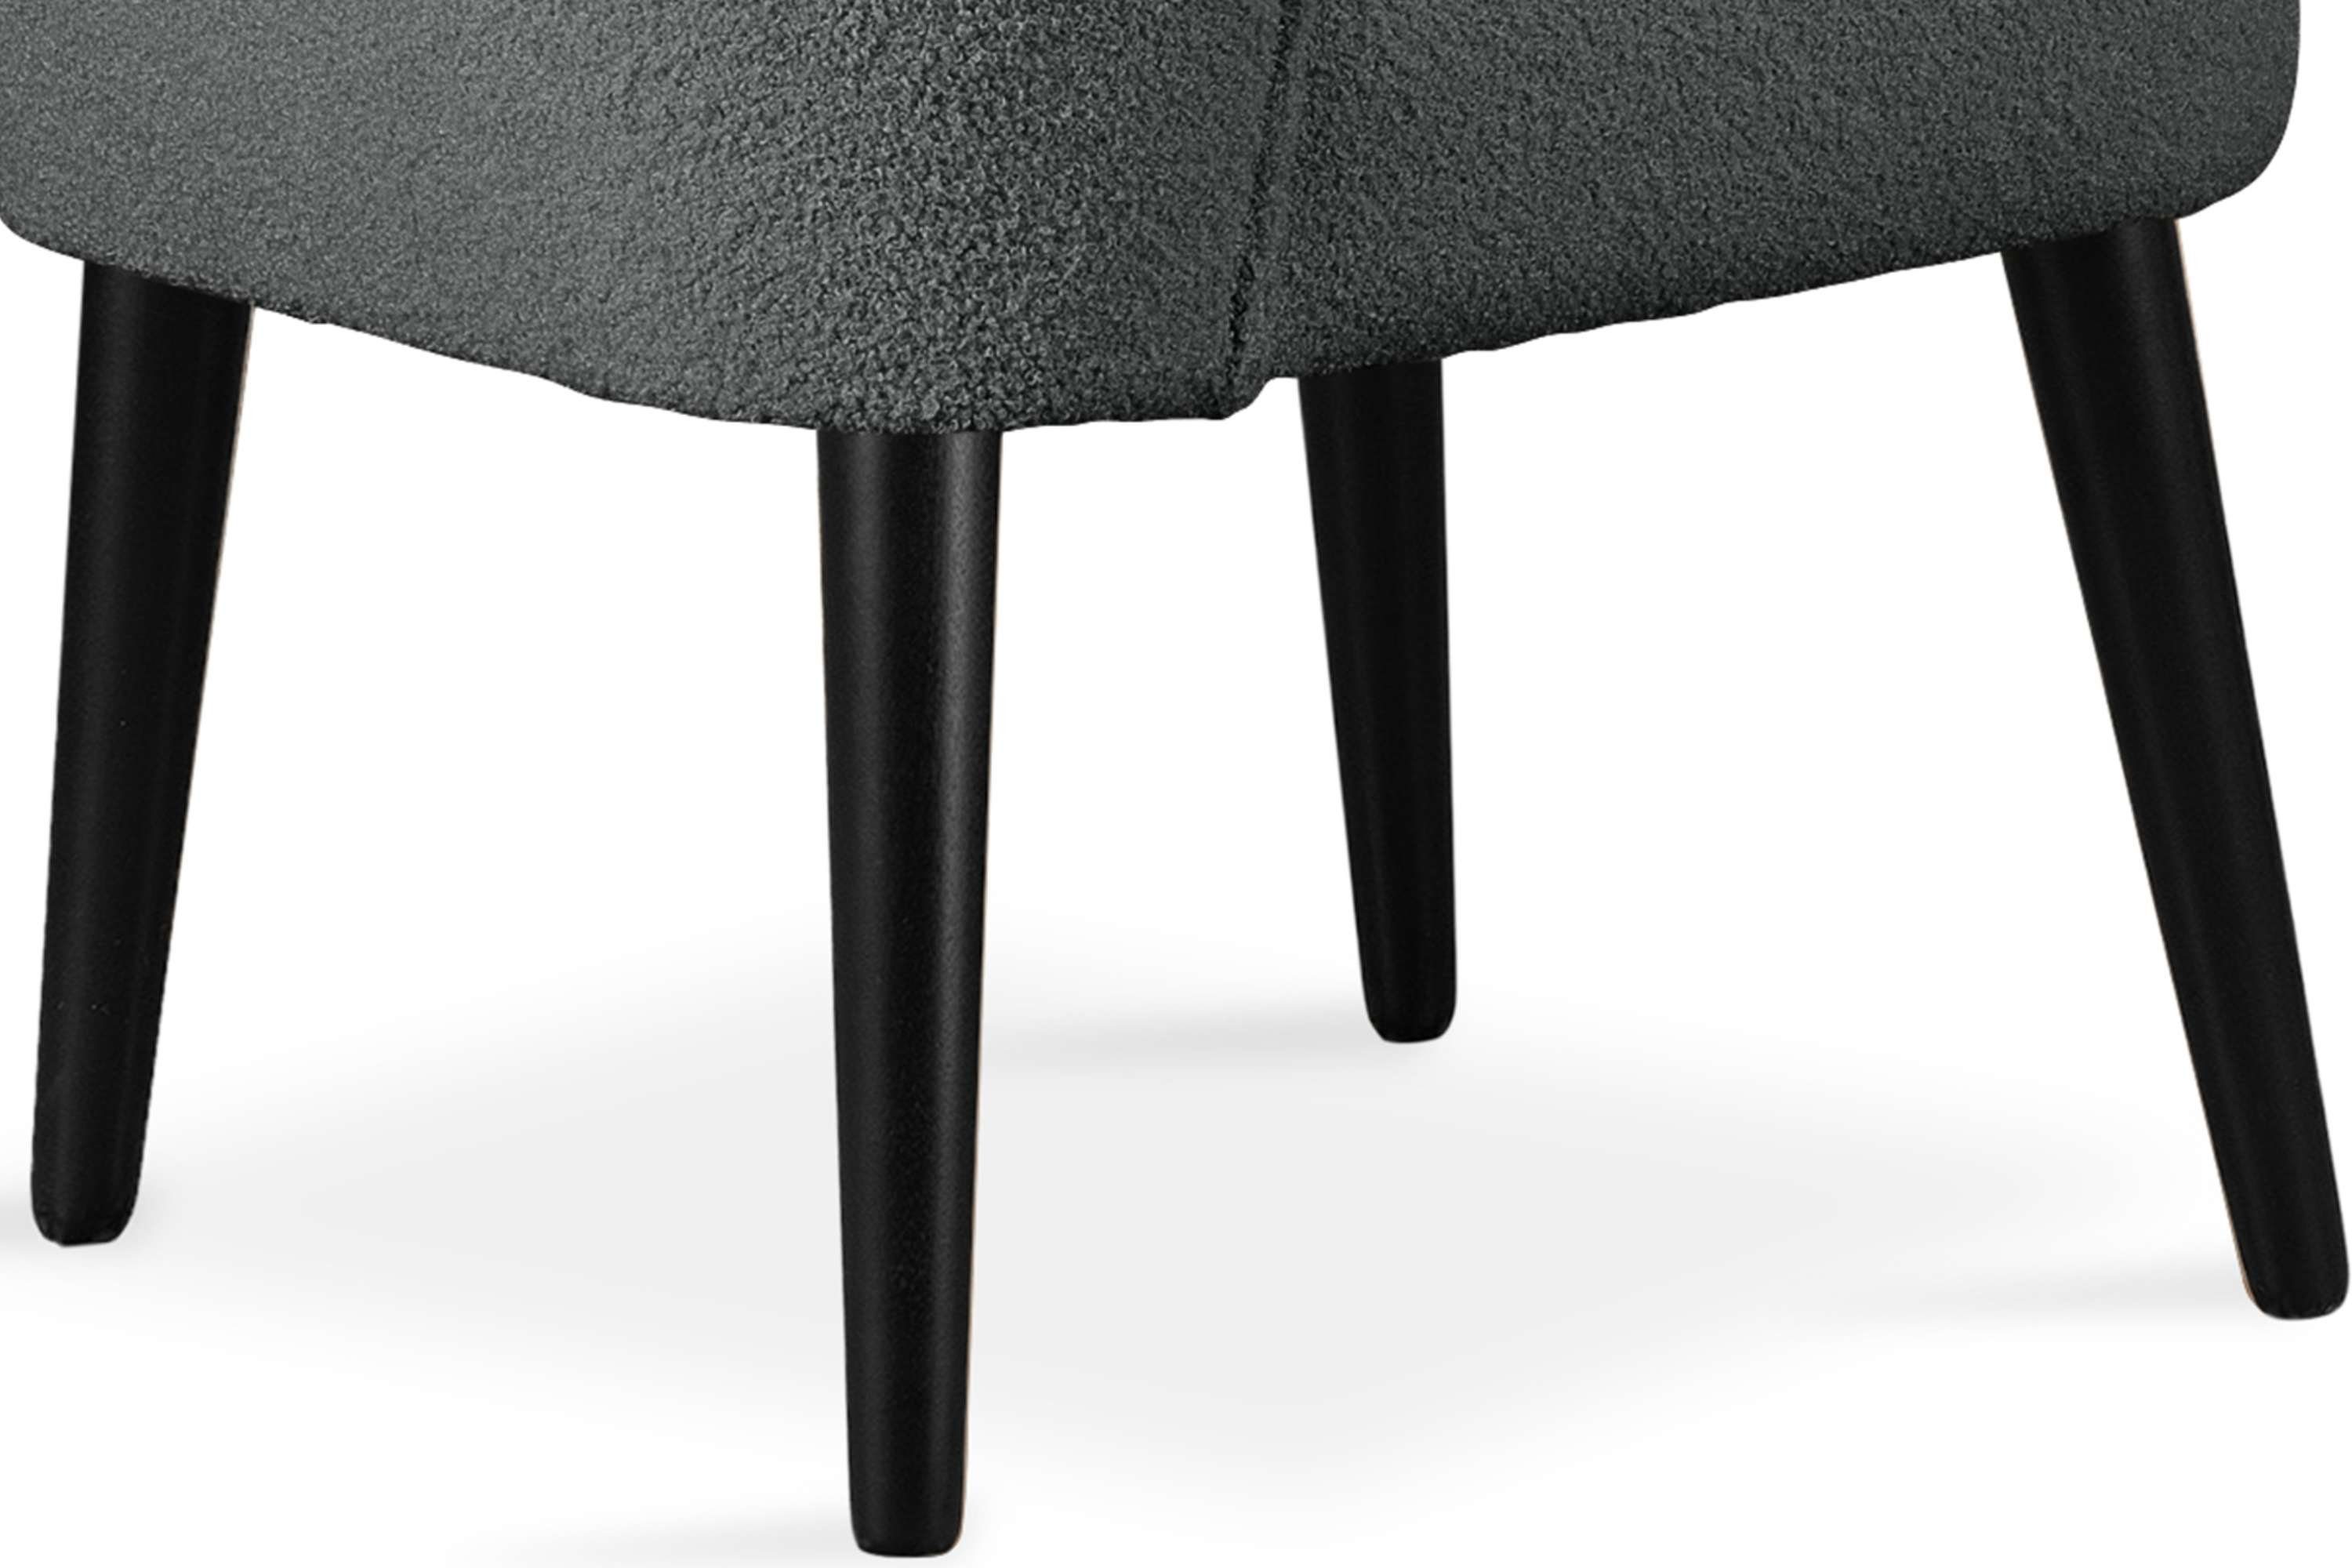 recyceltem Sessel, auf Buchenholz, APPA hohen aus Konsimo Cocktailsessel schwarz | Boucle-Stoff aus lackierten Beinen dunkelgrau/schwarz dunkelgrau